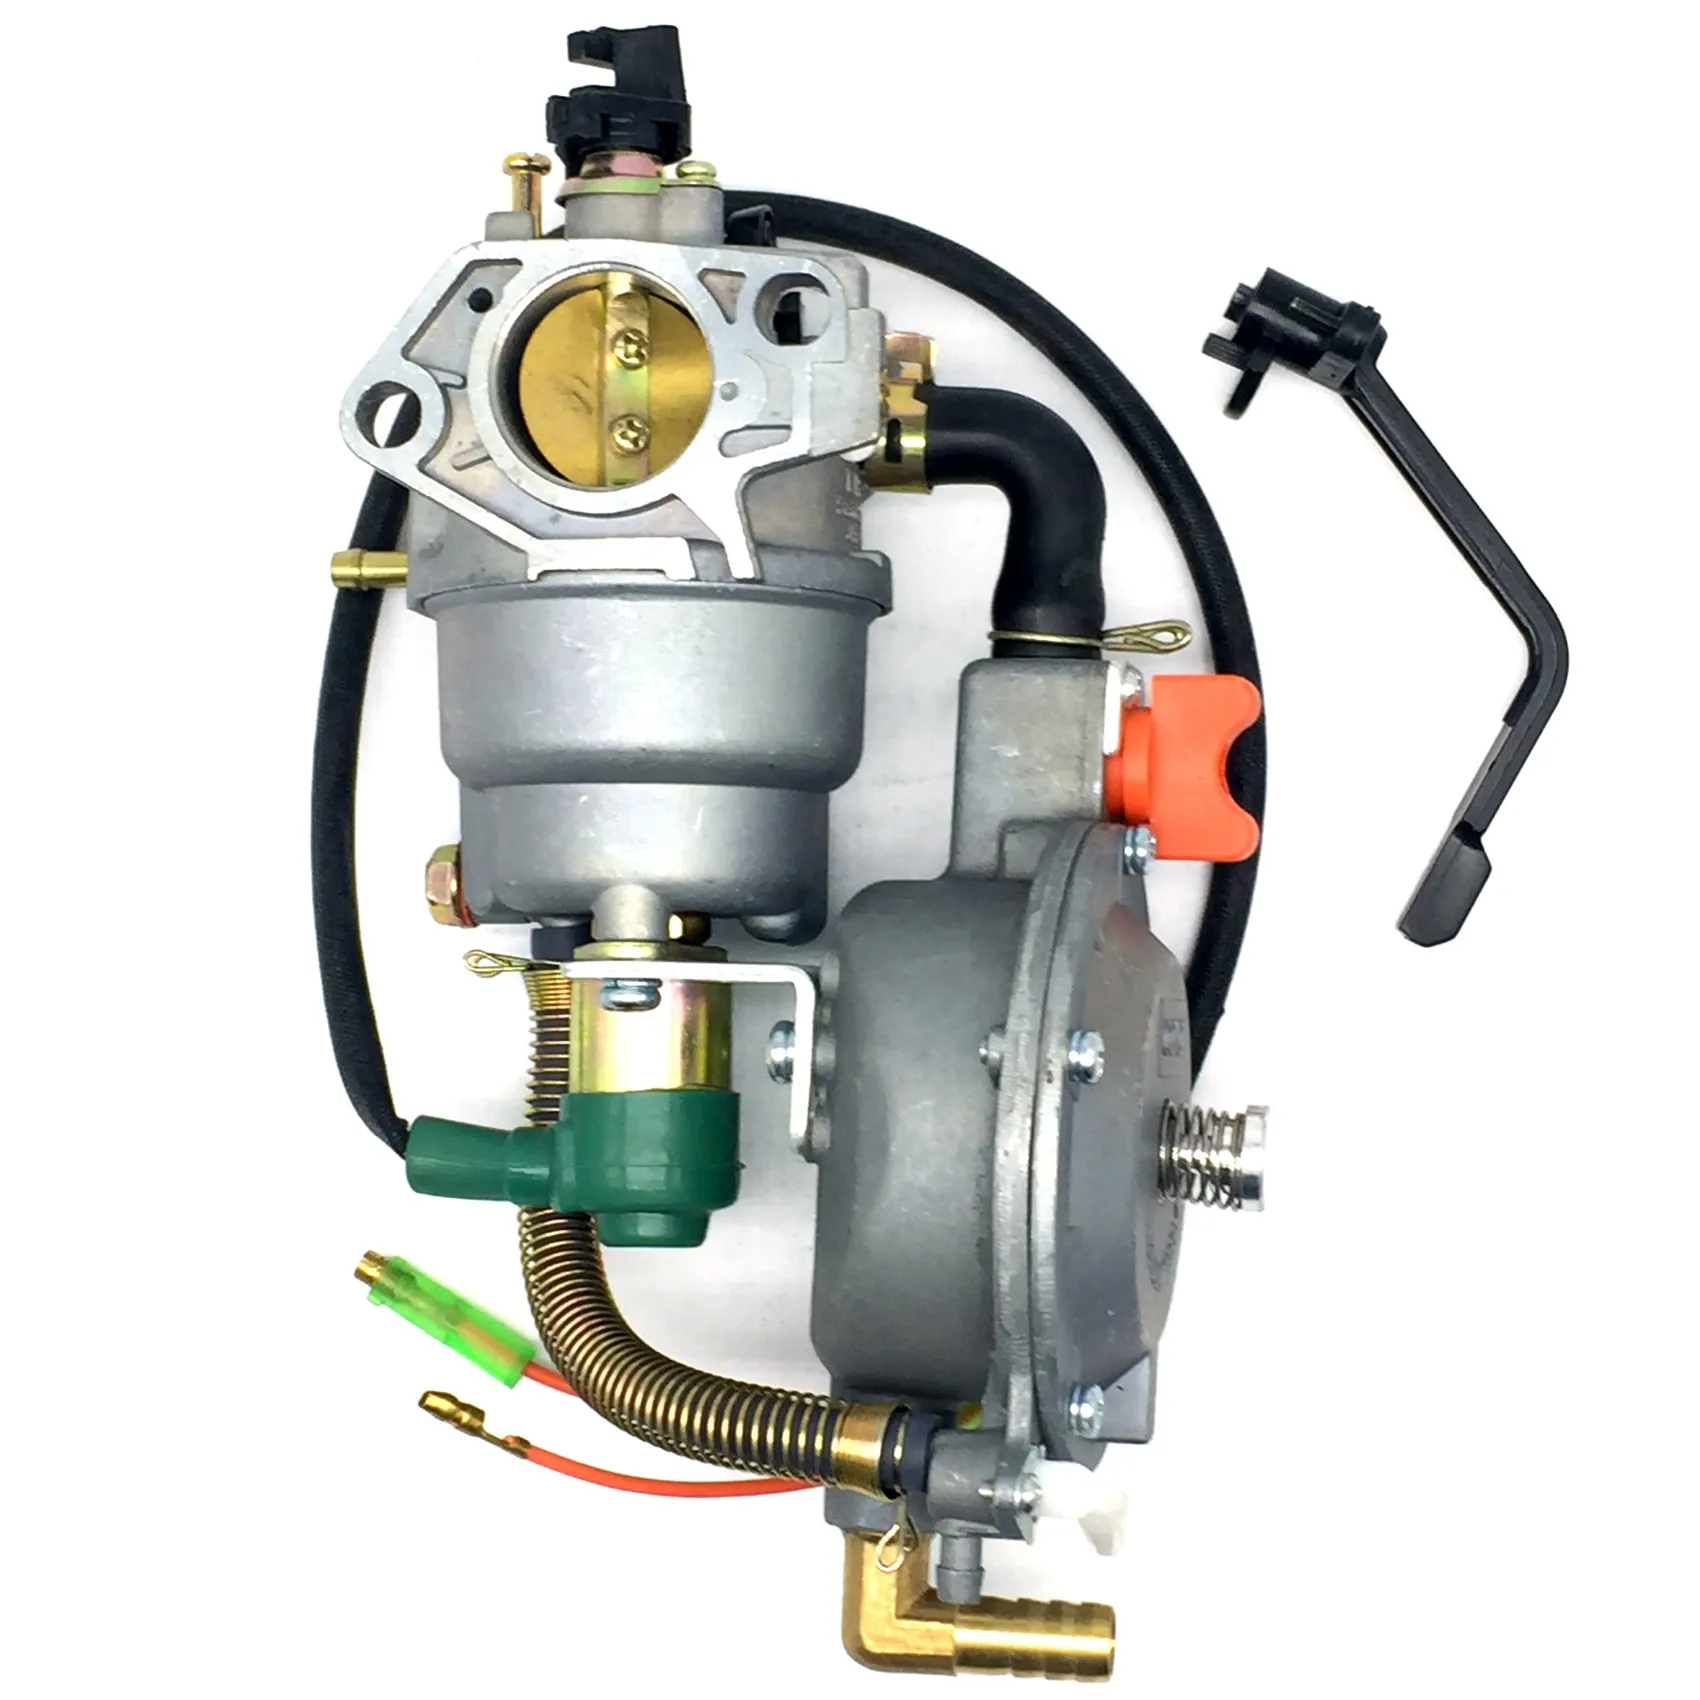 Dual Fuel Generator Carburetor for Honda GX390 GX340 Gas Small Engines 188F 5KW-8KW LPG NG Petrol Motorcycle Carburetor